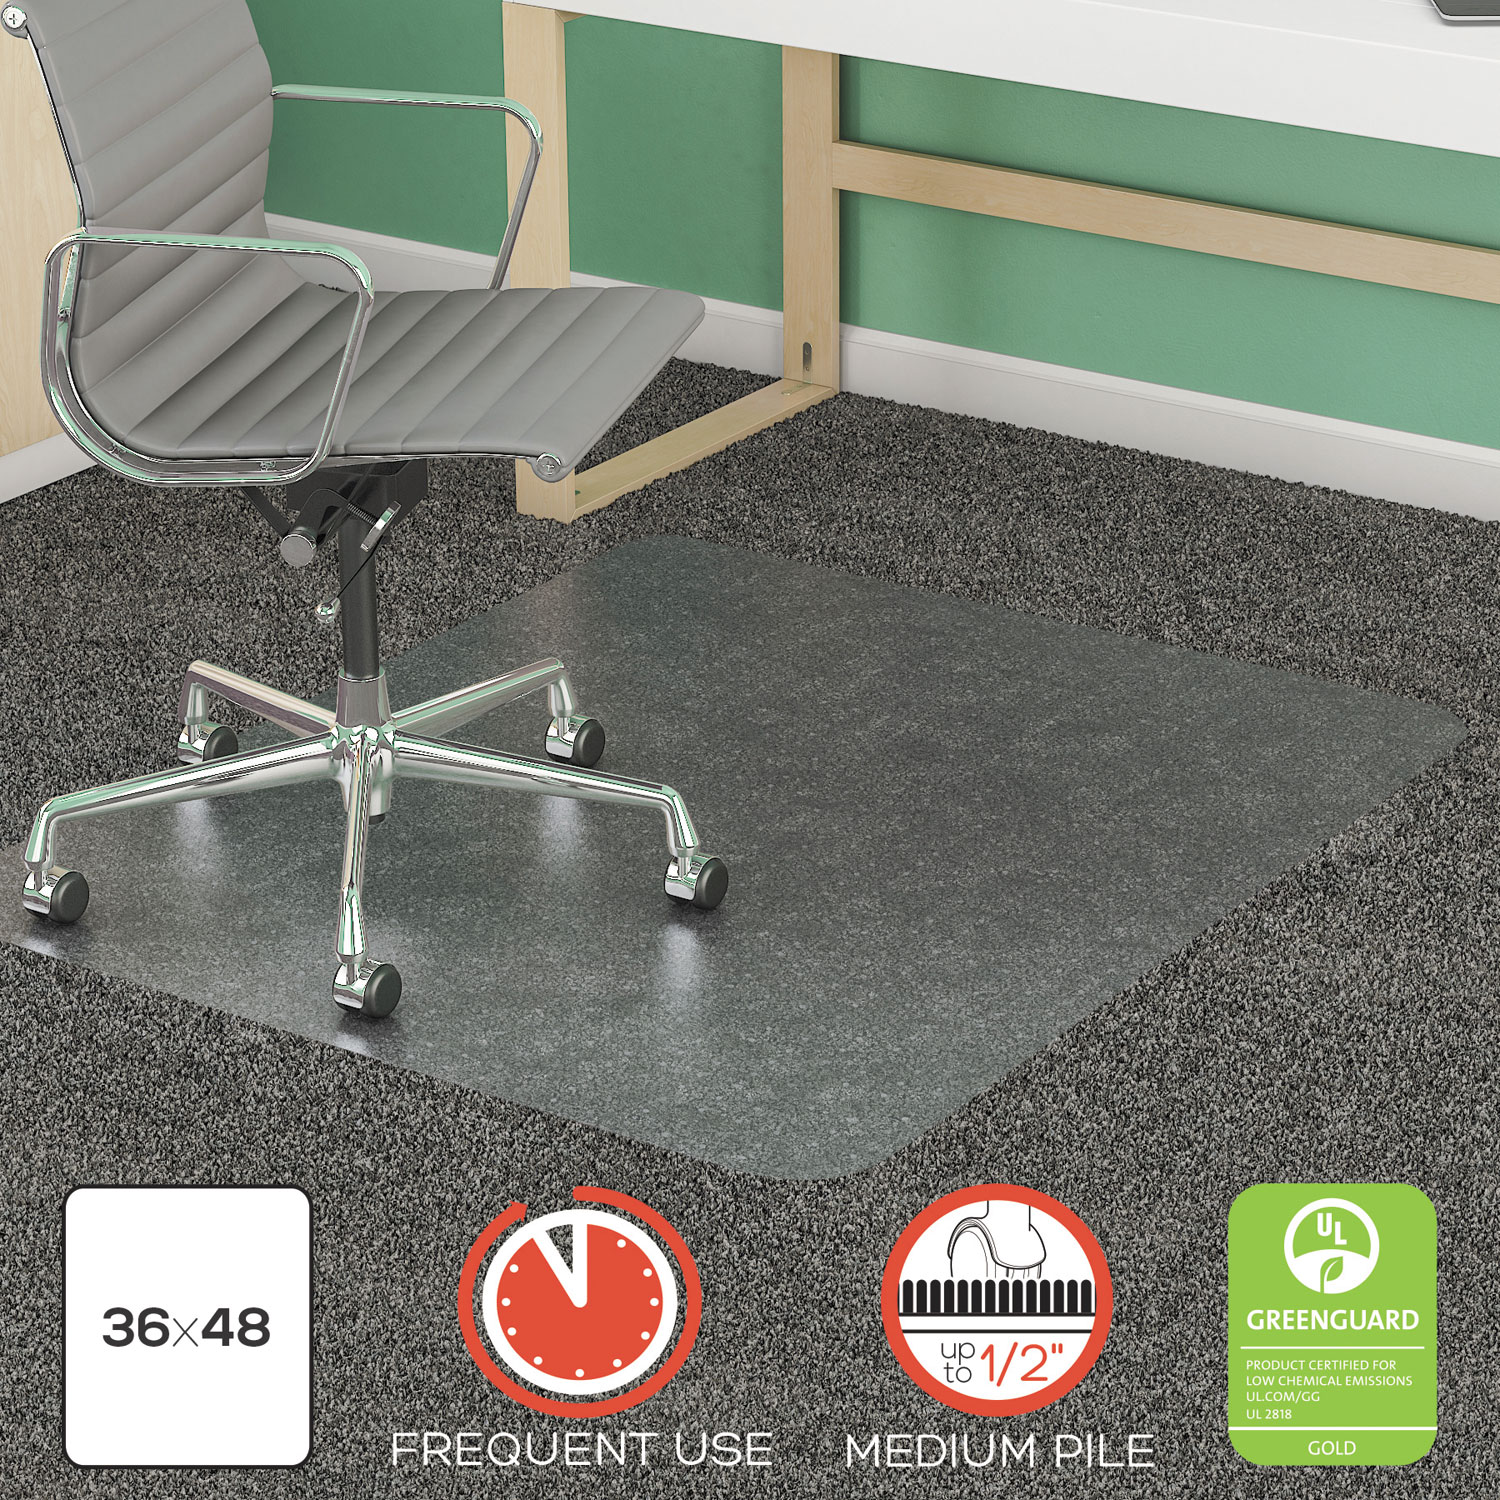  deflecto CM14142 SuperMat Frequent Use Chair Mat for Medium Pile Carpet, 36 x 48, Rectangular, Clear (DEFCM14142) 